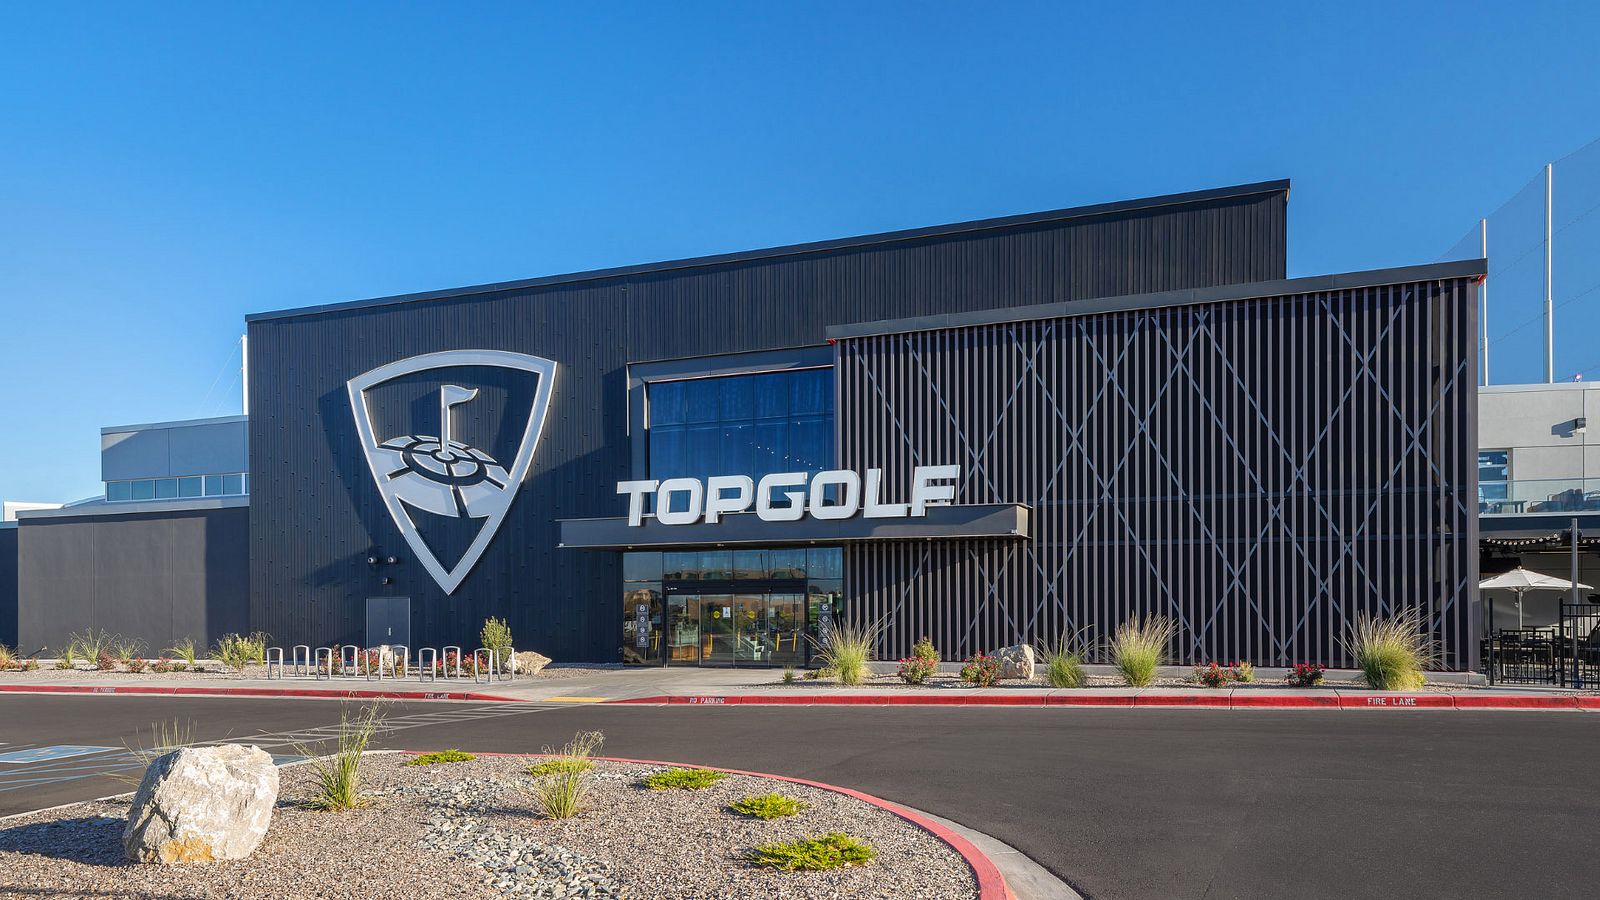 Exterior of Topgolf Albuquerque